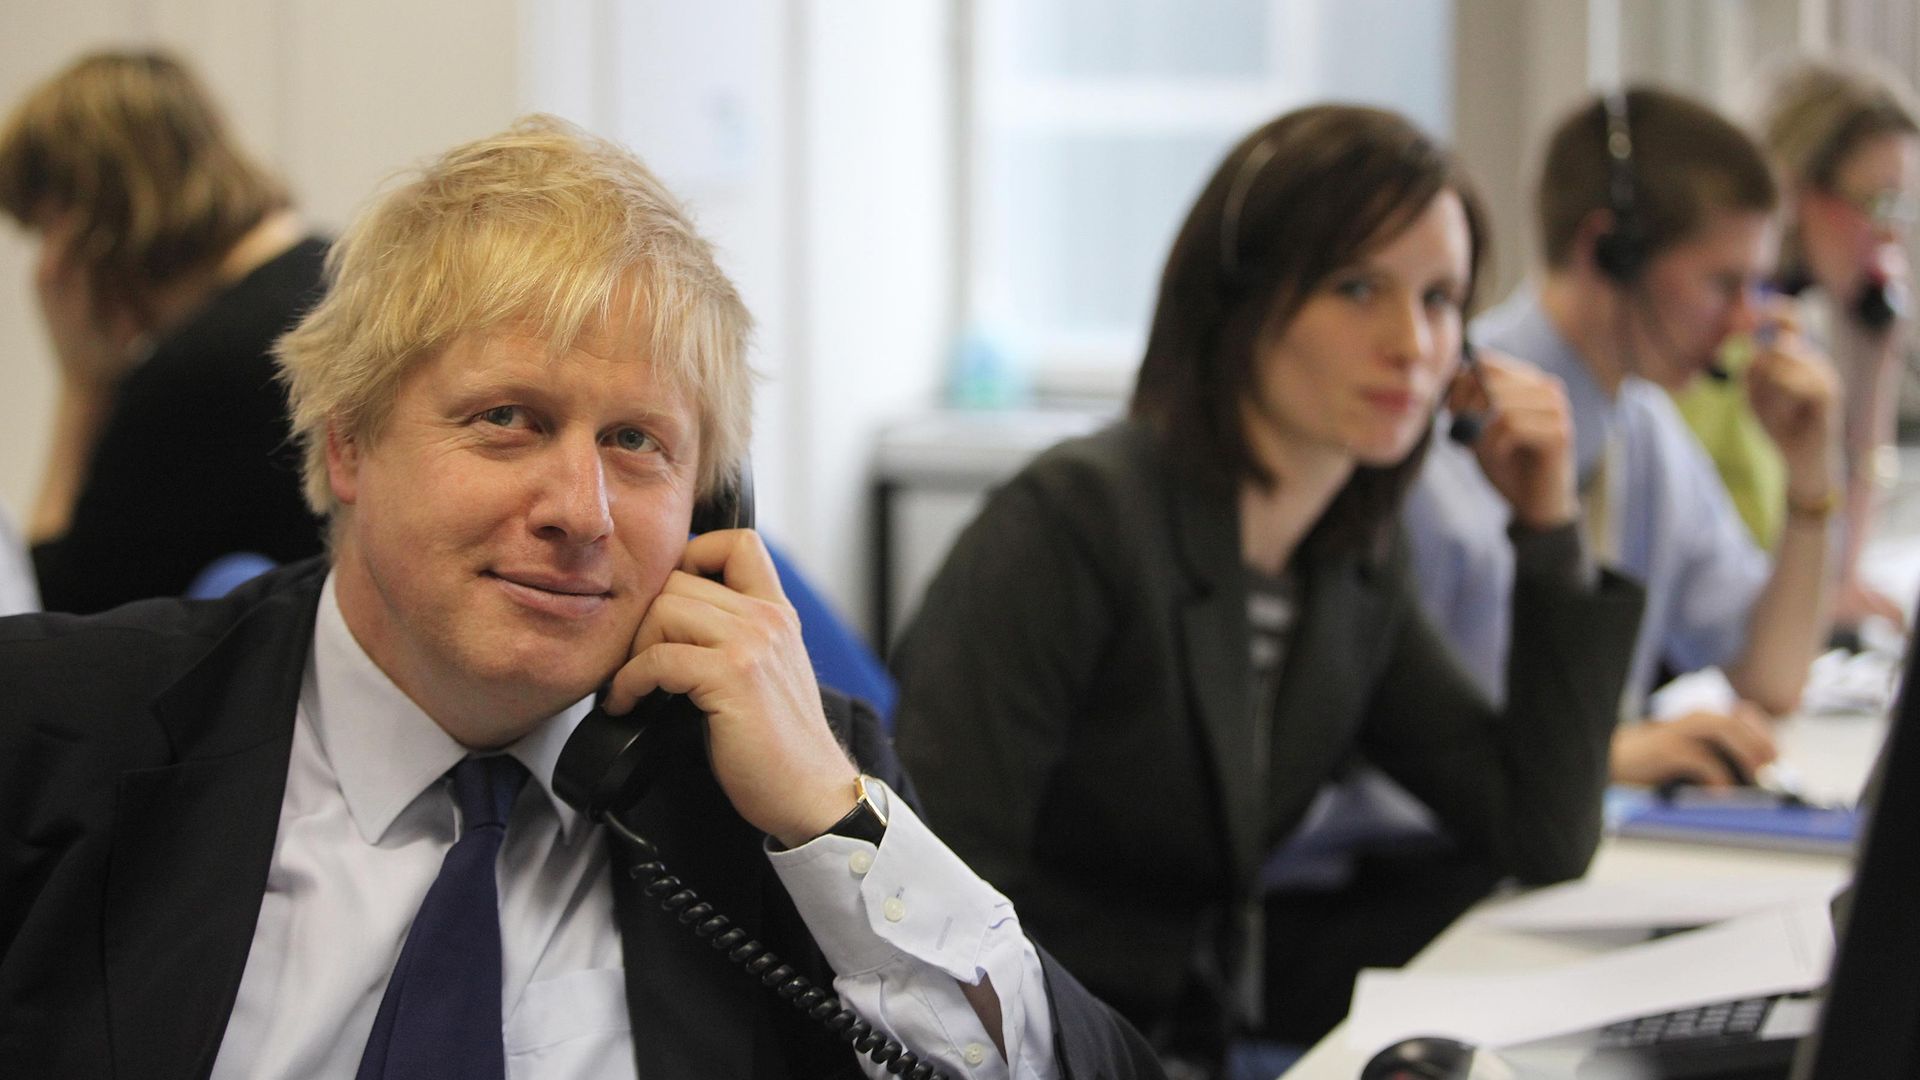 Boris Johnson on the phone - Credit: PA